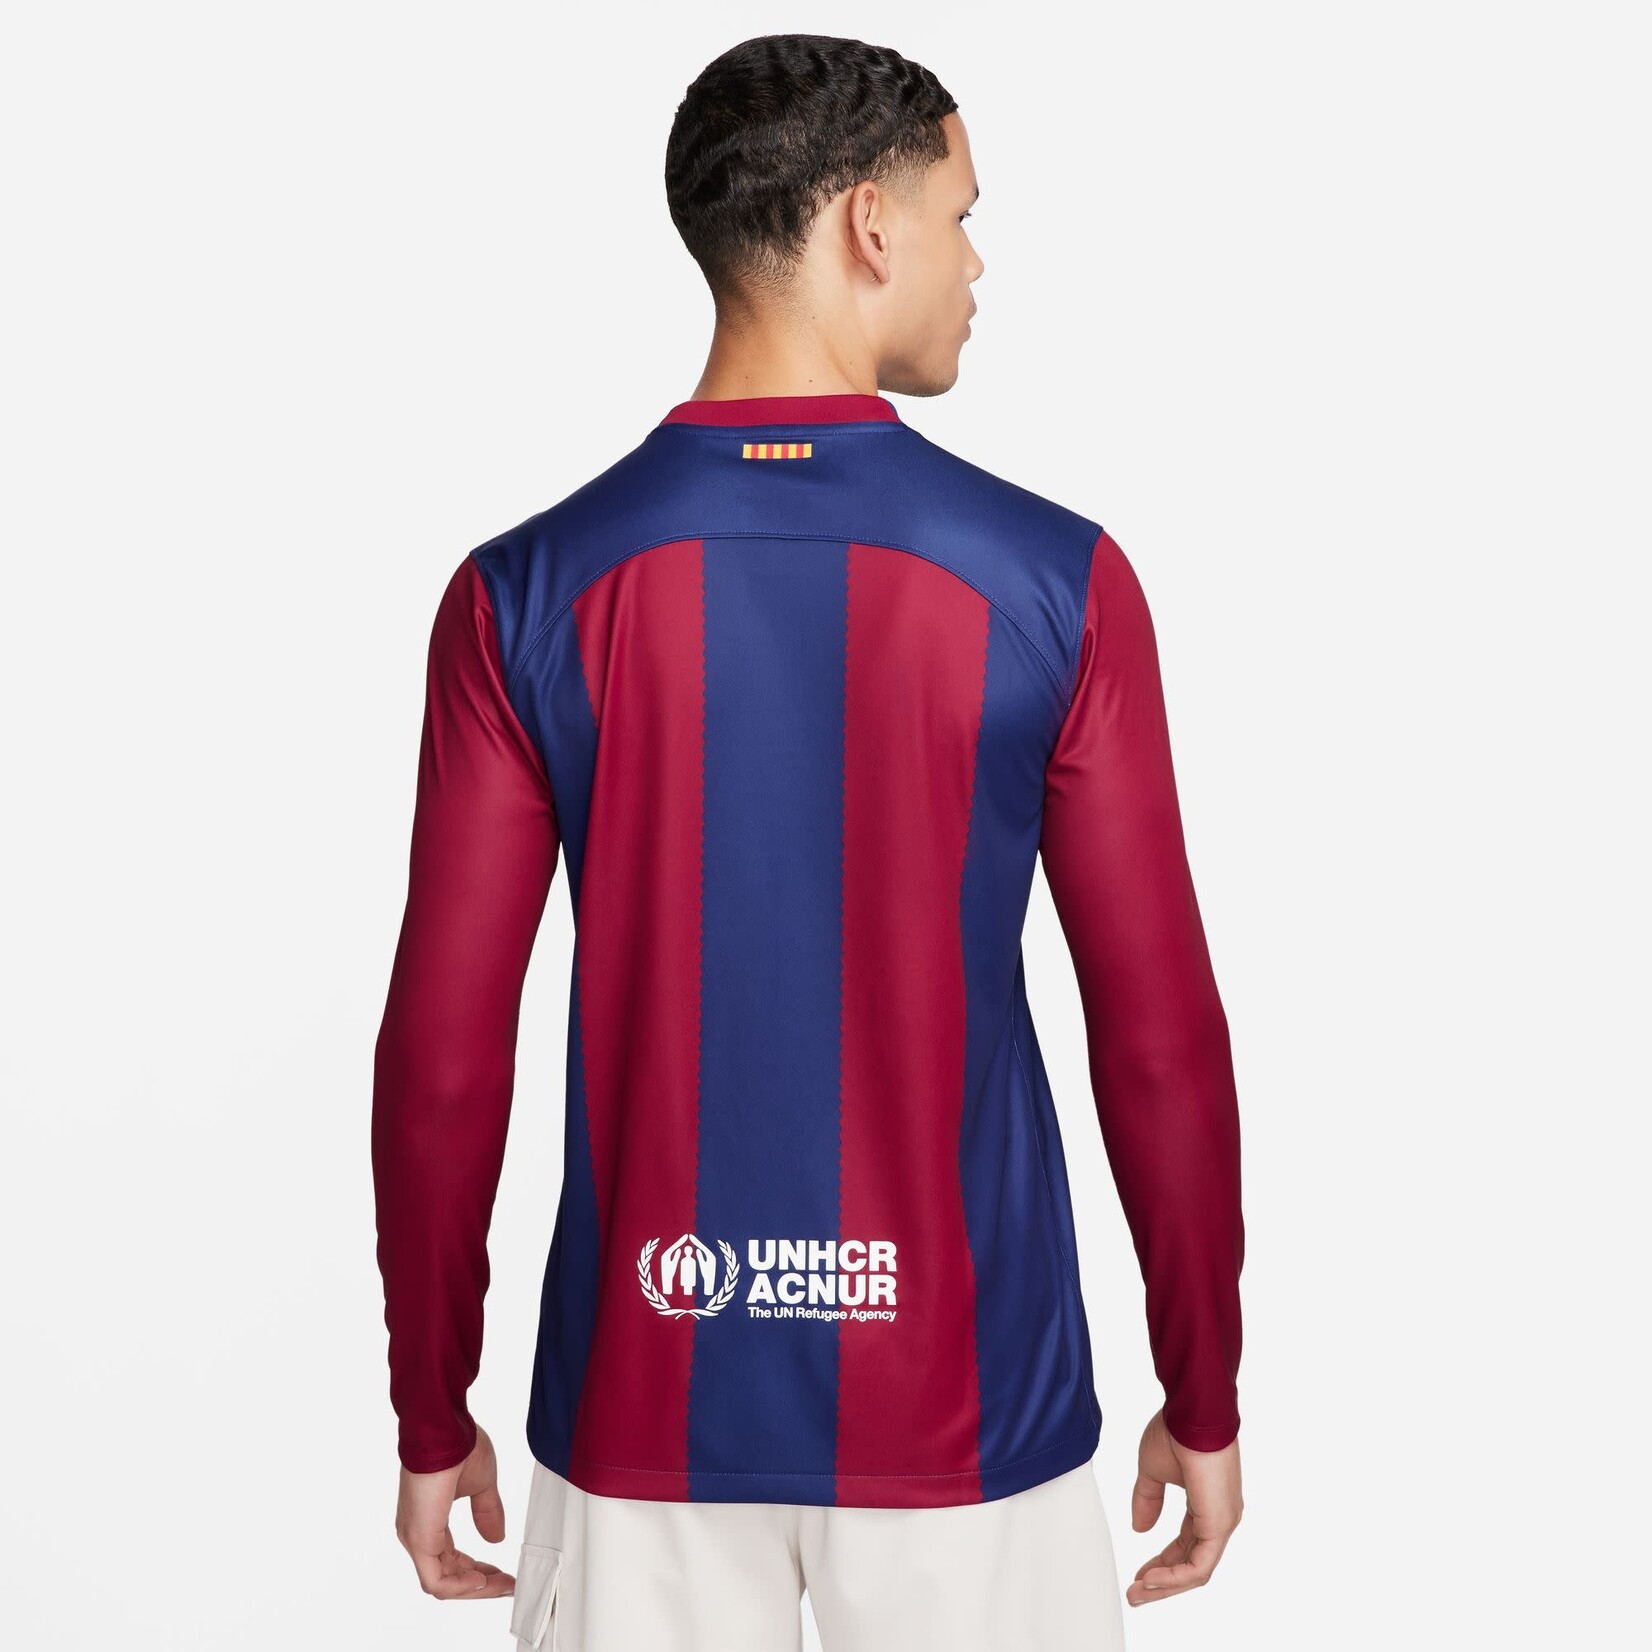 Nike present the new FC Barcelona home shirt